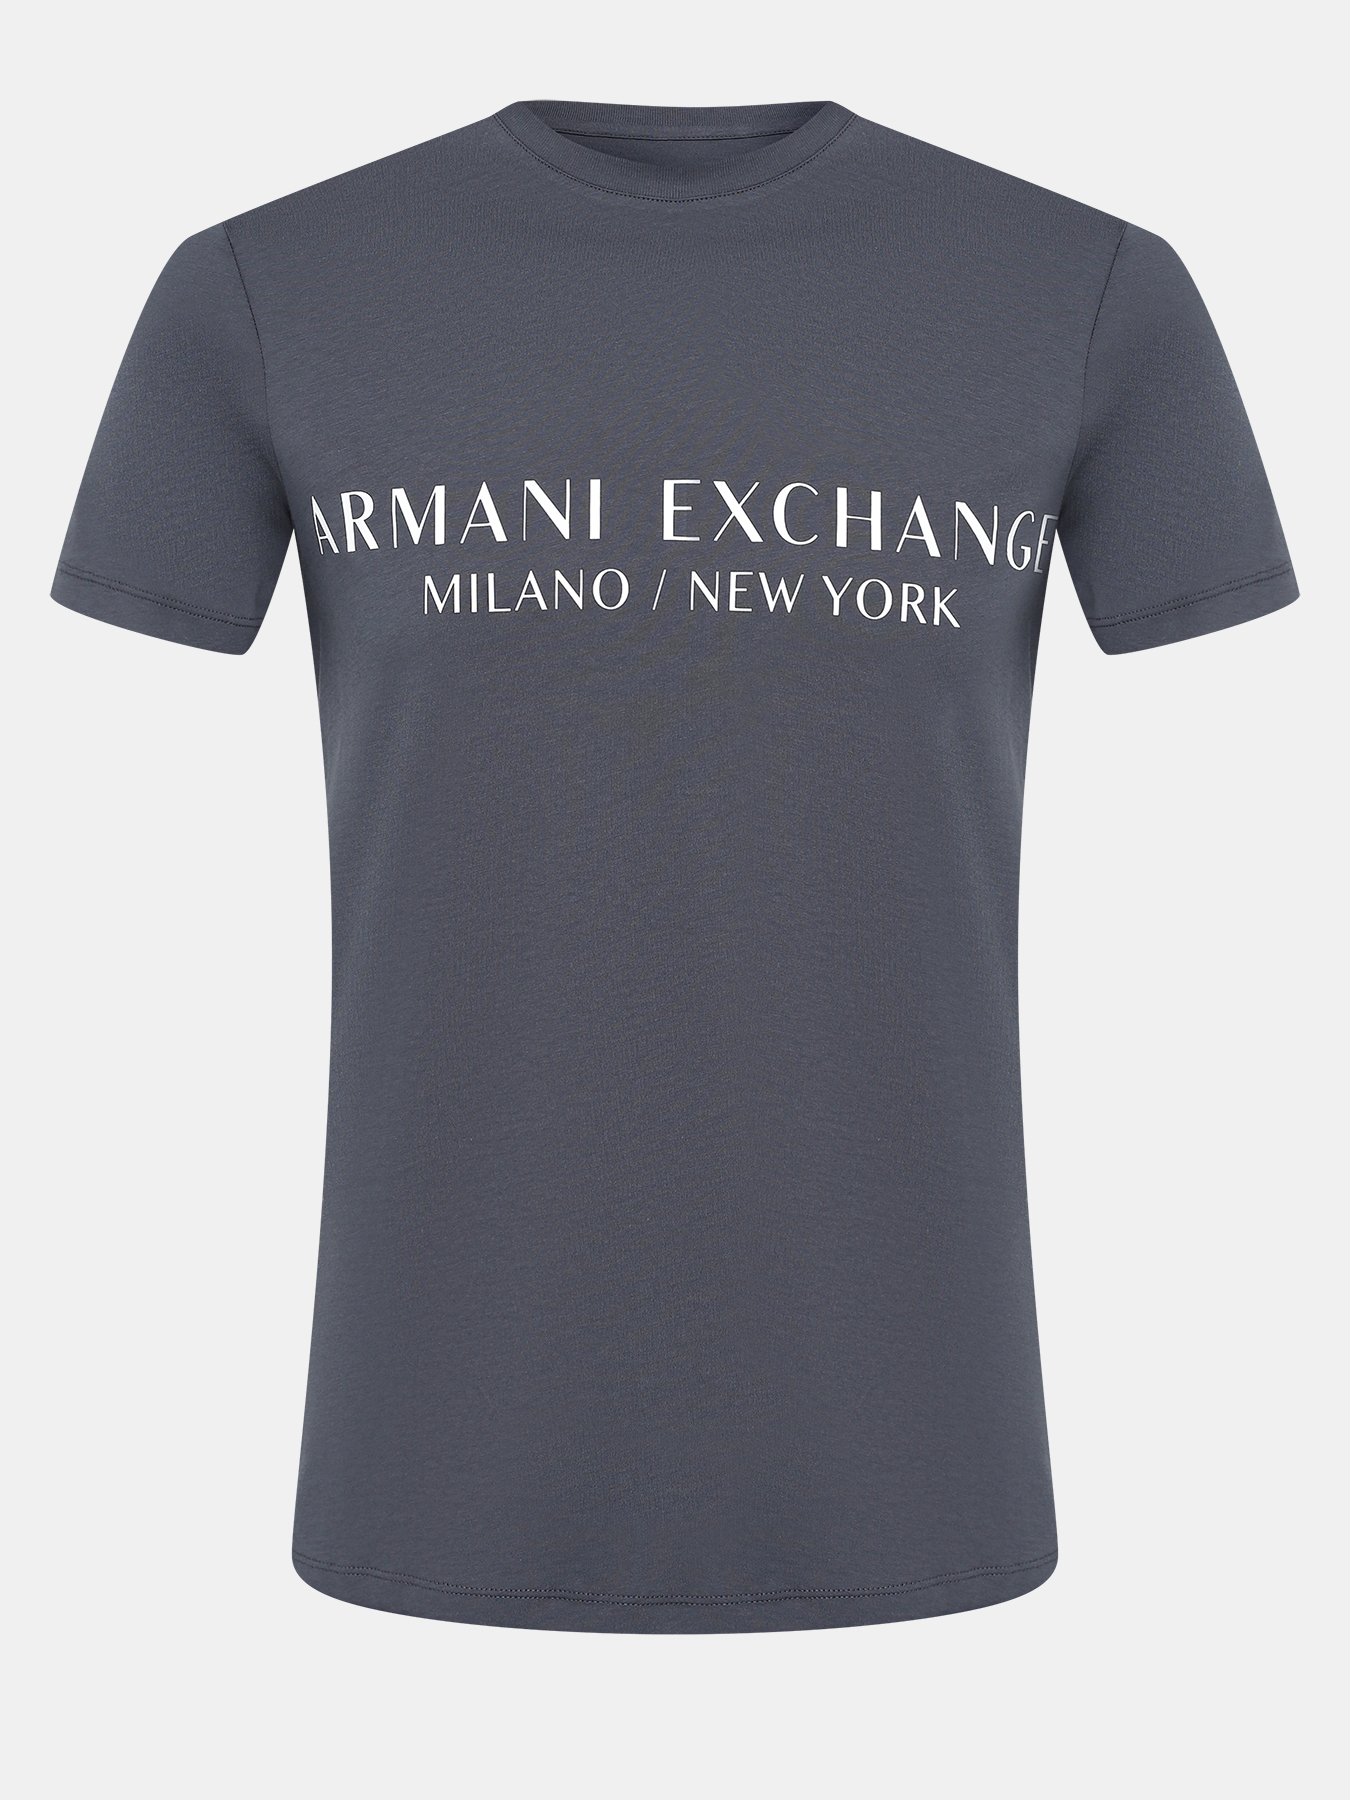 Футболка Armani Exchange 422425-043, цвет темно-серый, размер 48-50 - фото 1